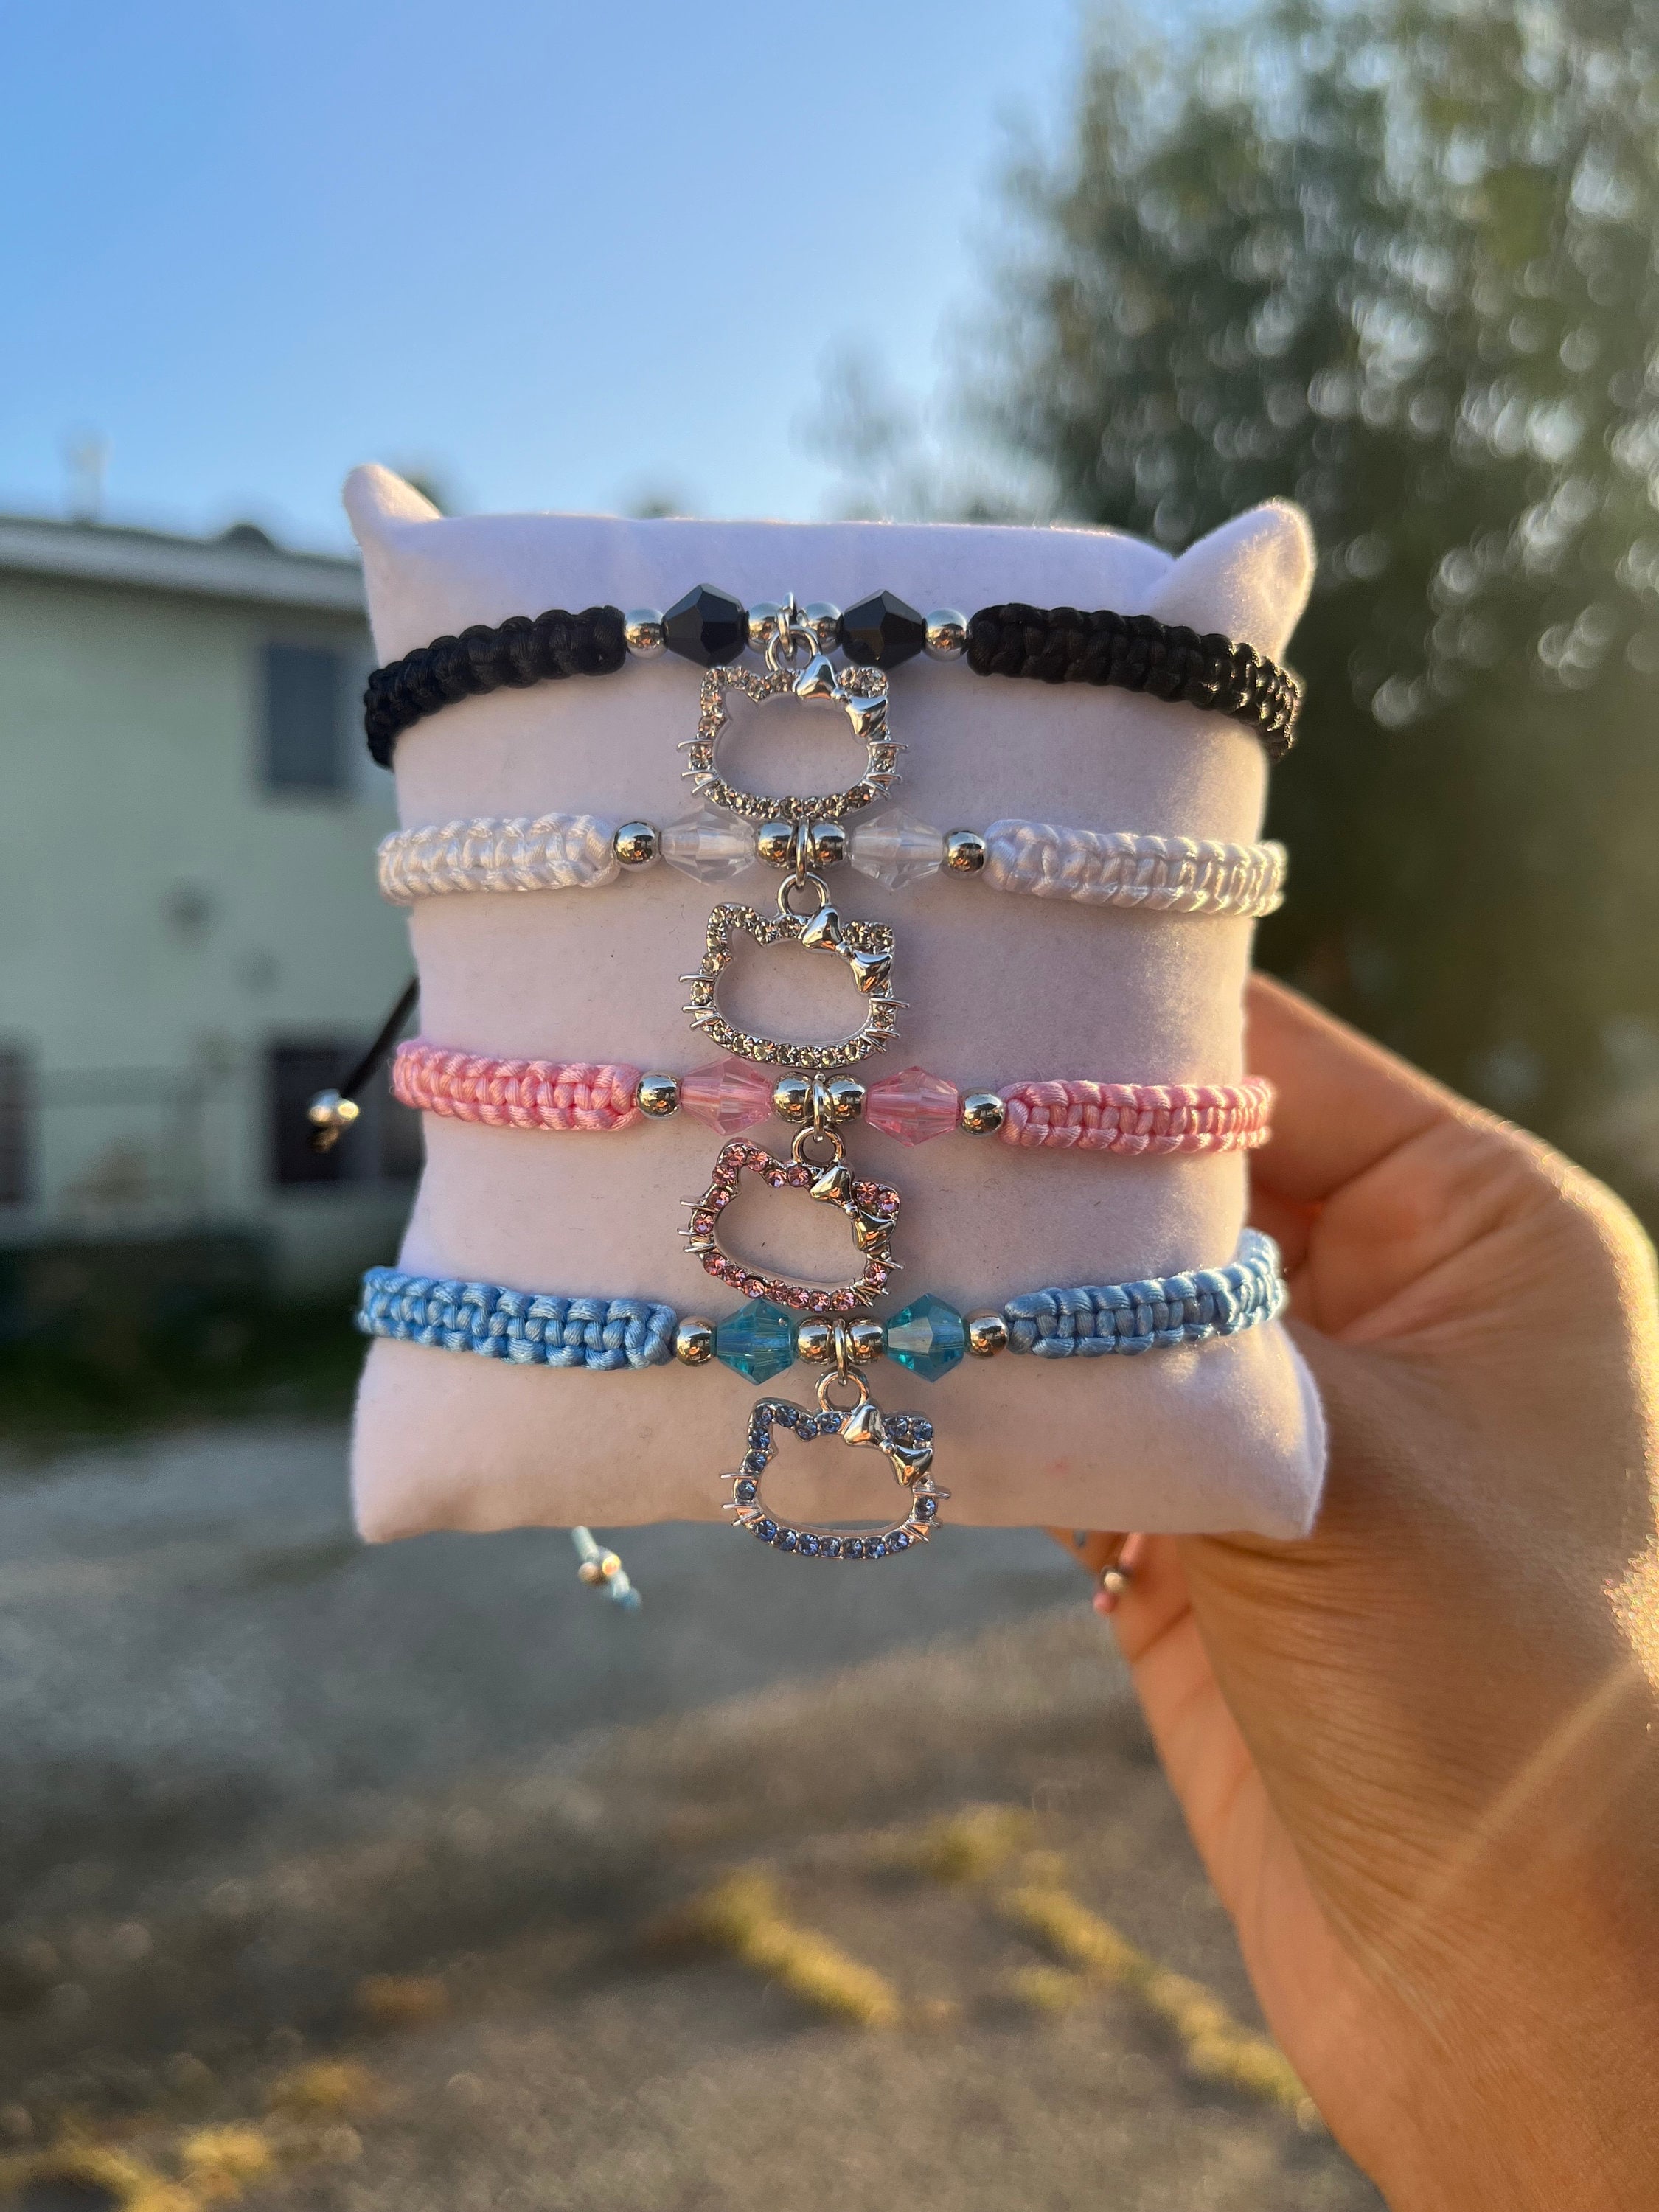 MEKZU Hello Inspired Kitty Bangle Bracelet, Kawaii Accessories Charms Bracelet, Adjustable Stainless Steel Cuff Bracelet Birthday Gift for Women